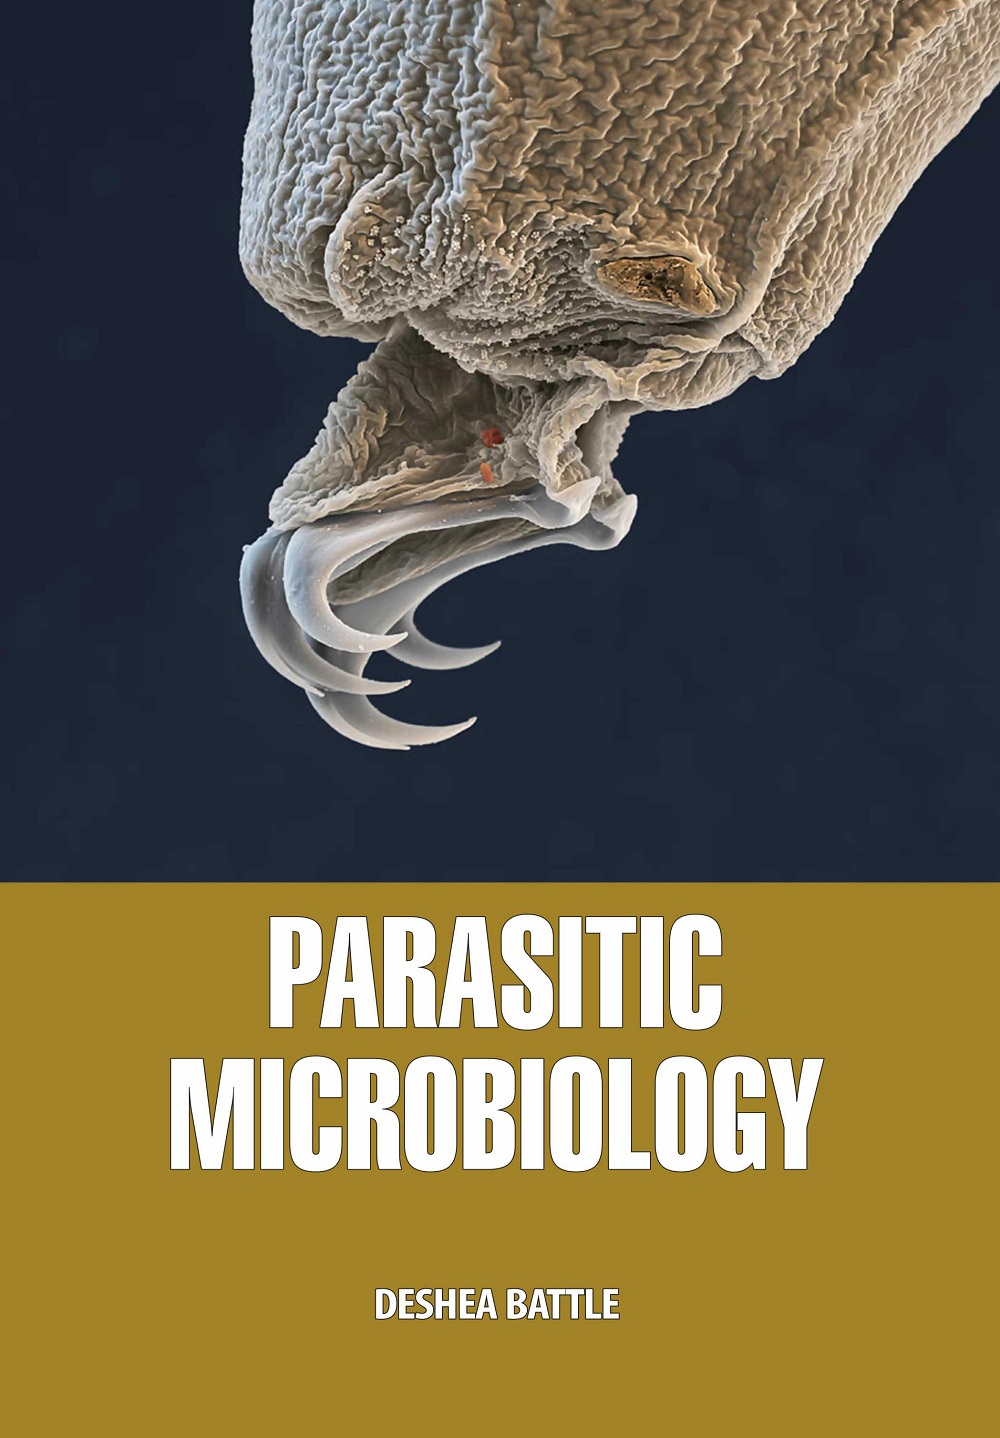 Parasitic Microbiology